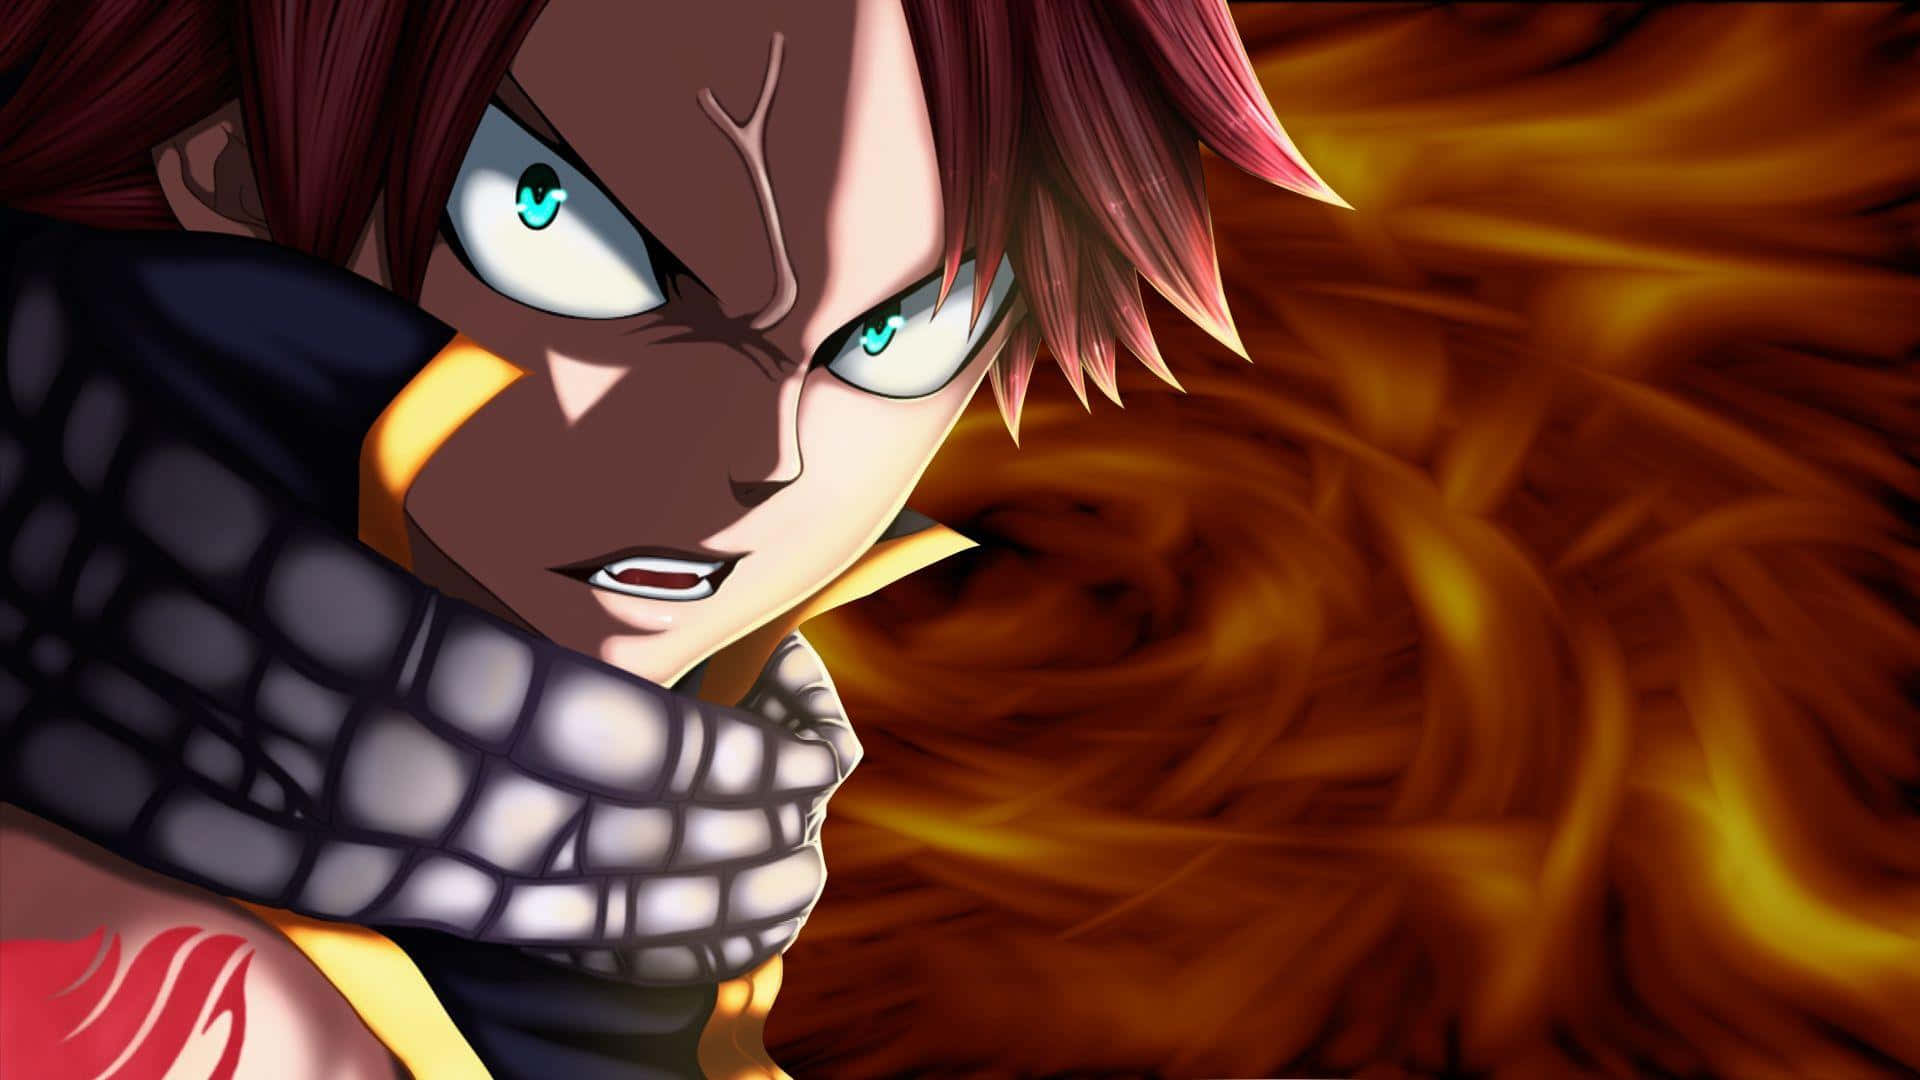 Natsu Dragneel - The Fire Dragon Slayer